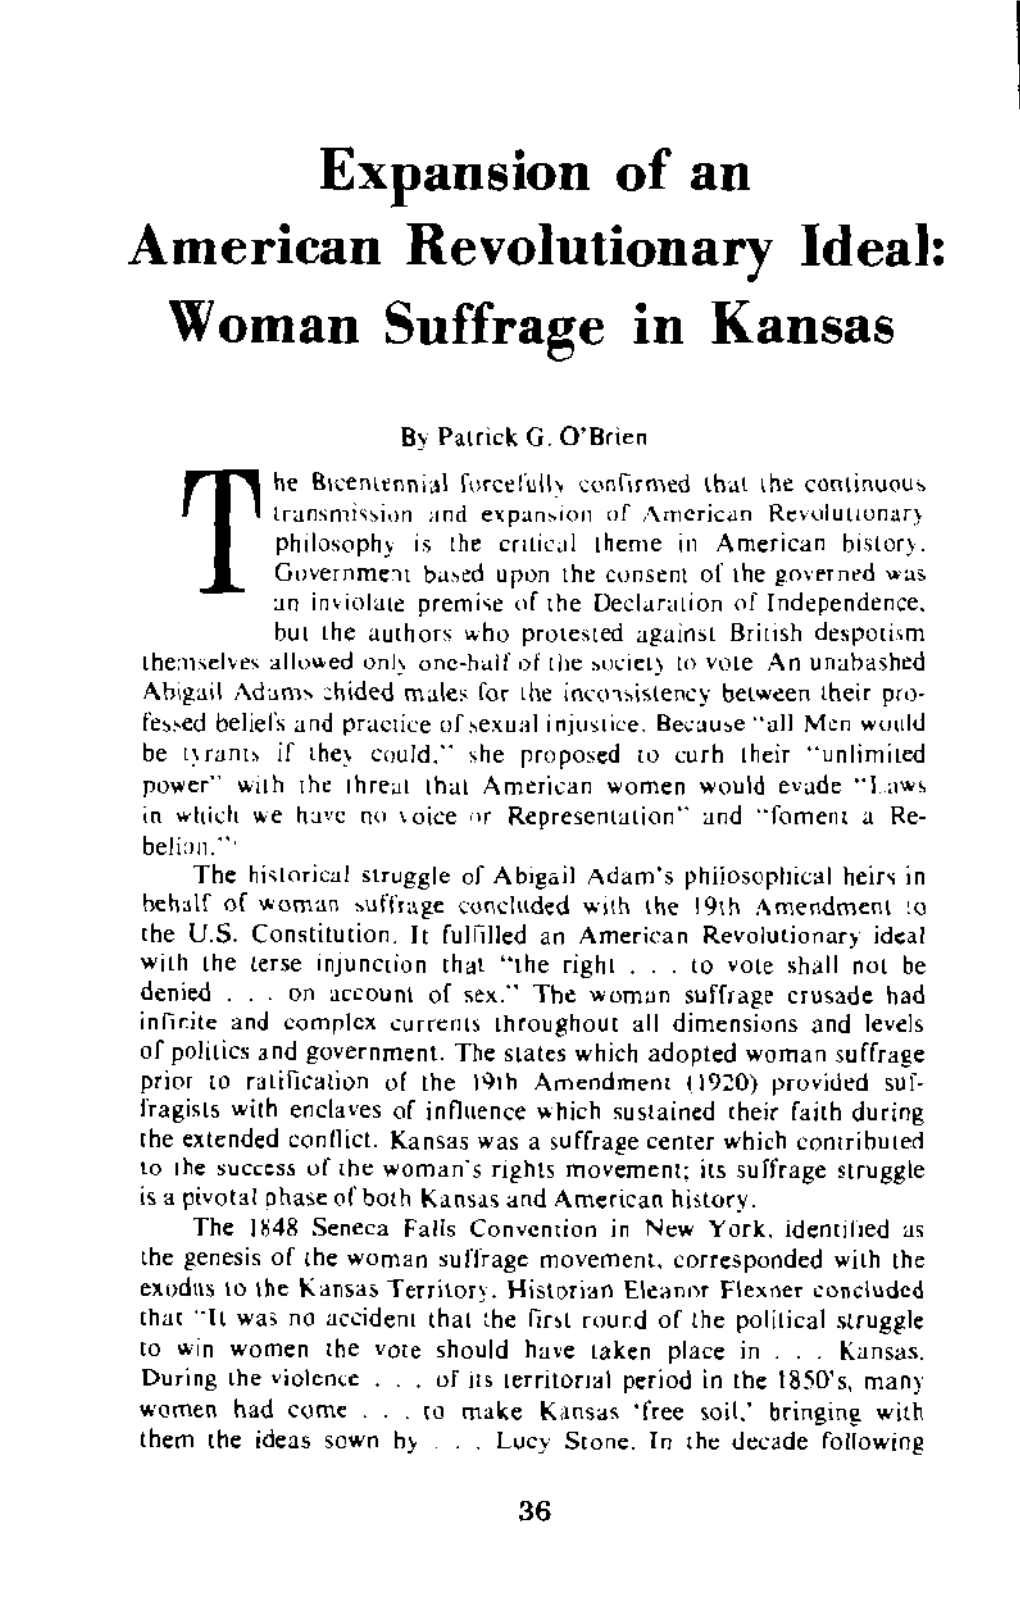 Woman Suffrage in Kansas